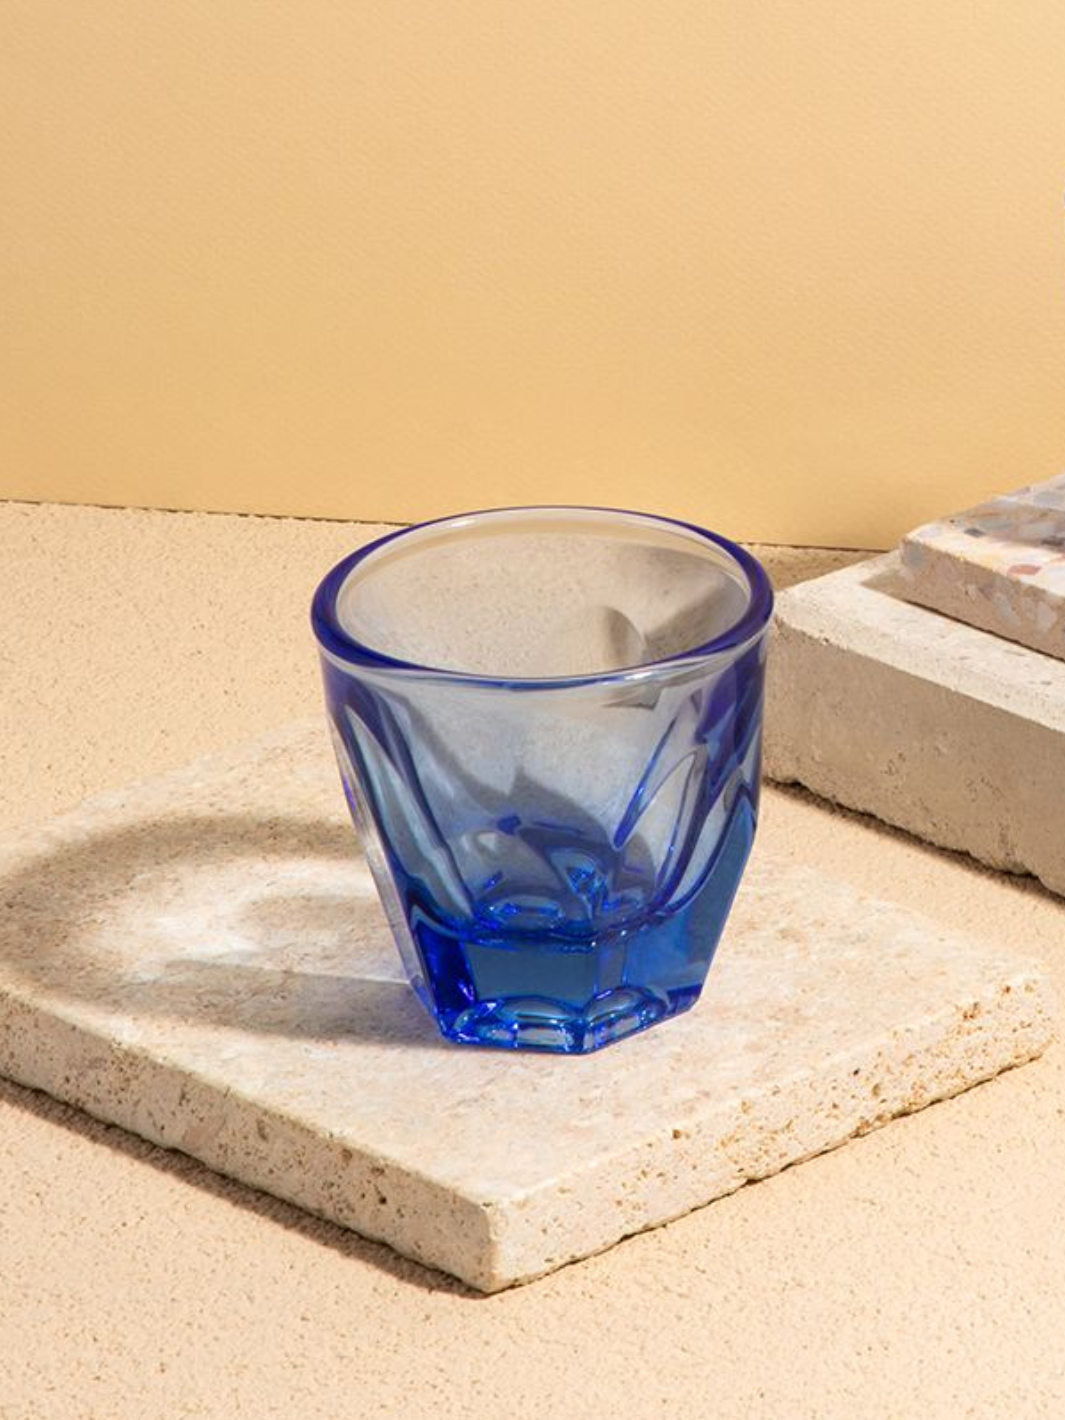 Crafting a Specialty Glass: notNeutral's VERO Cortado